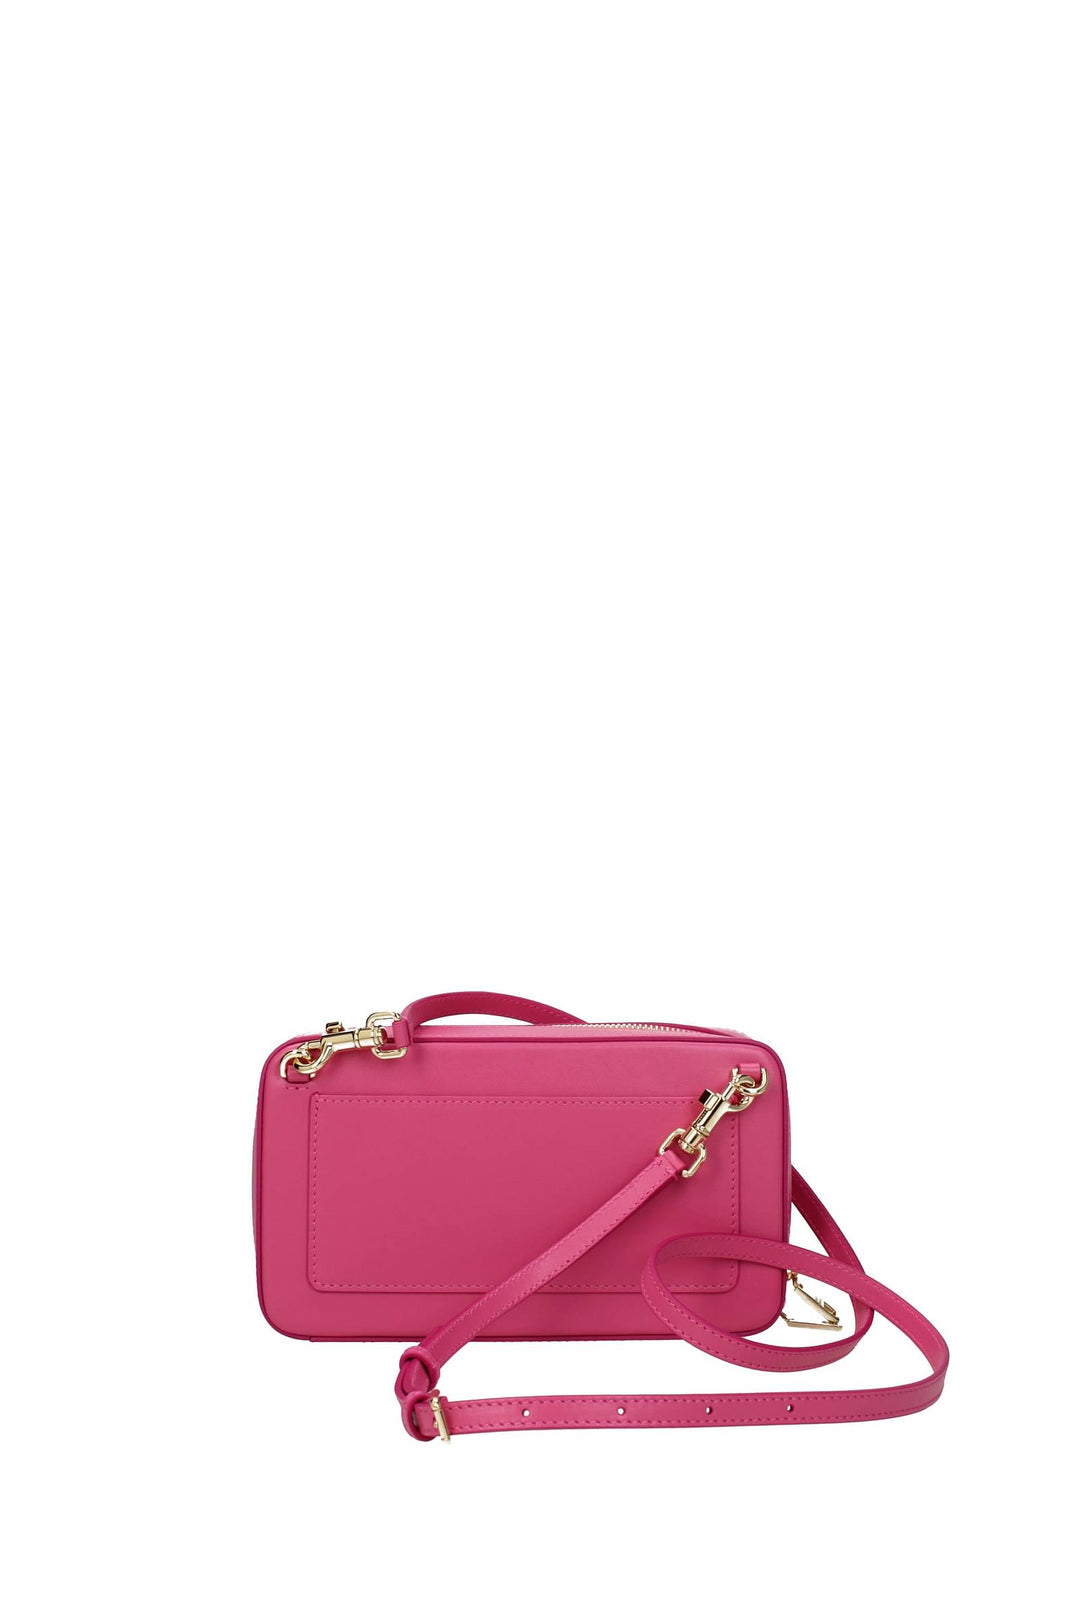 Dolce&Gabbana Borse A Tracolla Camera Bag Pelle Rosa Glicine - Dolce & Gabbana - Donna